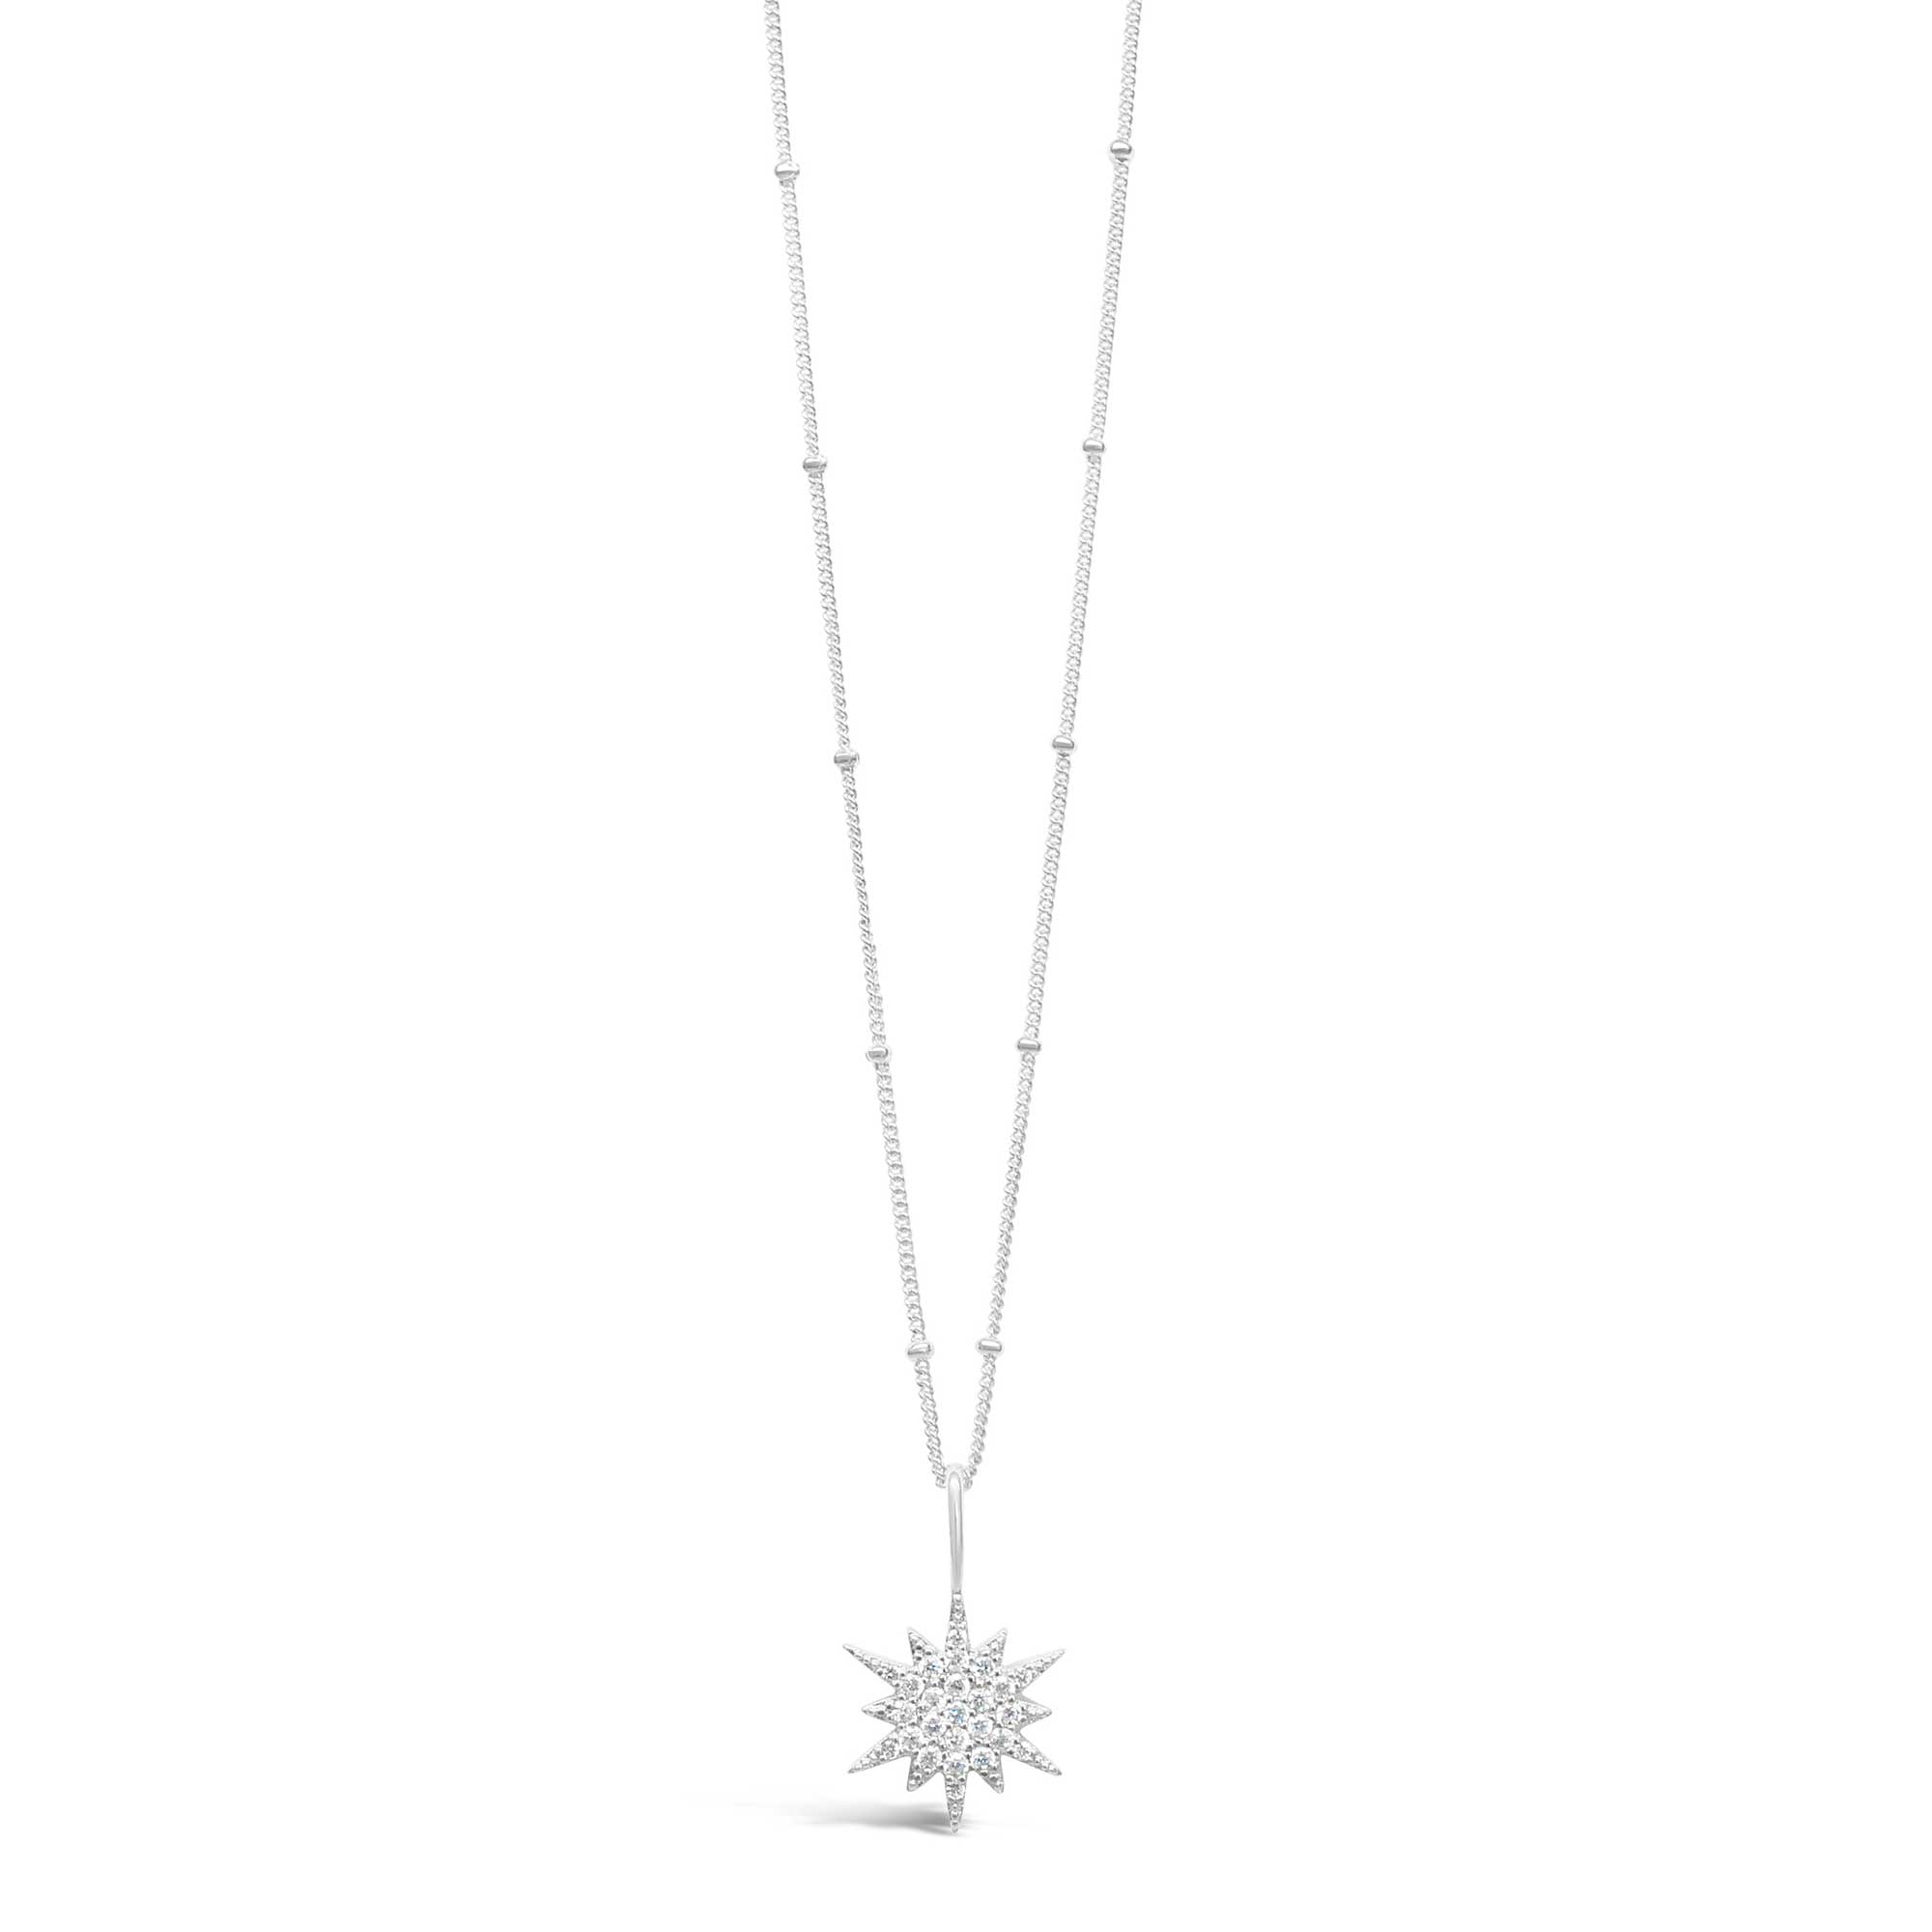 Stia Charm & Chain Necklace - Starburst: Precious Accents, Ltd.